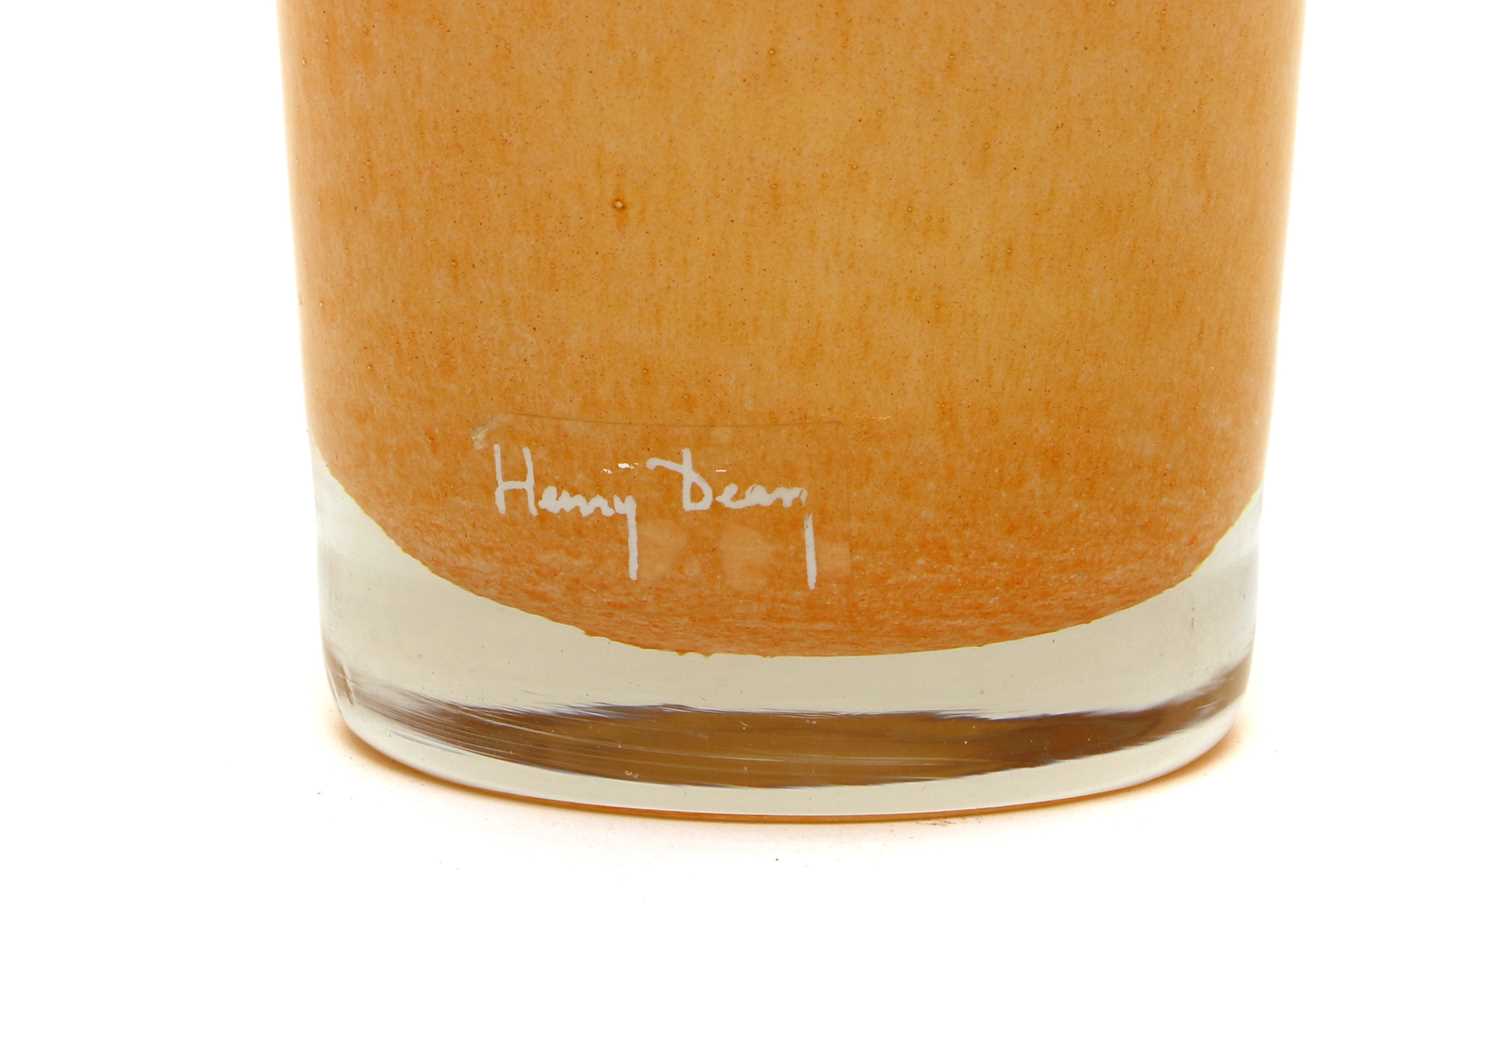 A Henry Dean glass vase, - Image 4 of 4